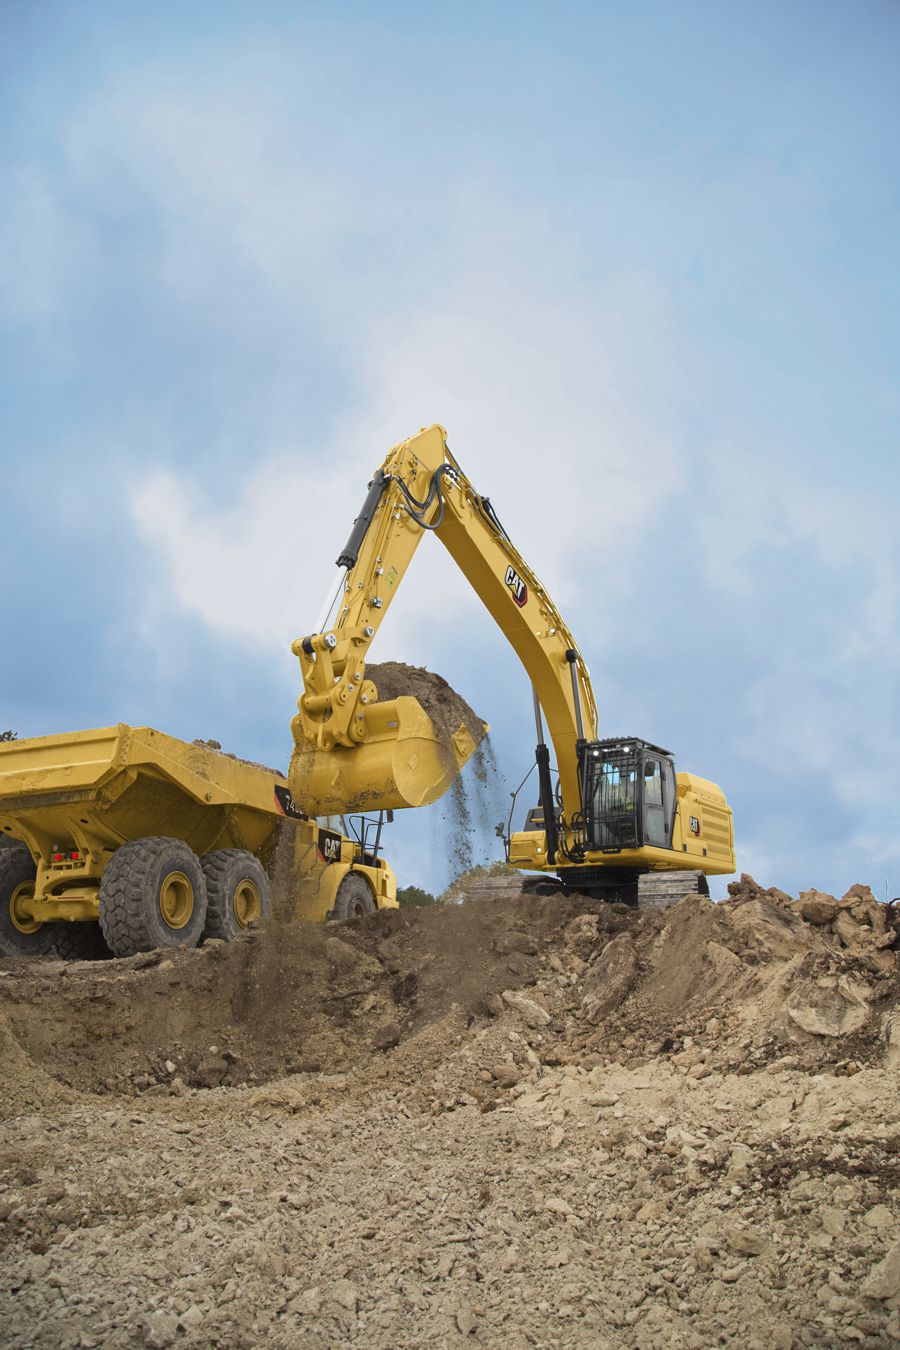 Next Generation Cat 349 Excavator delivers 45 percent more operating efficiency